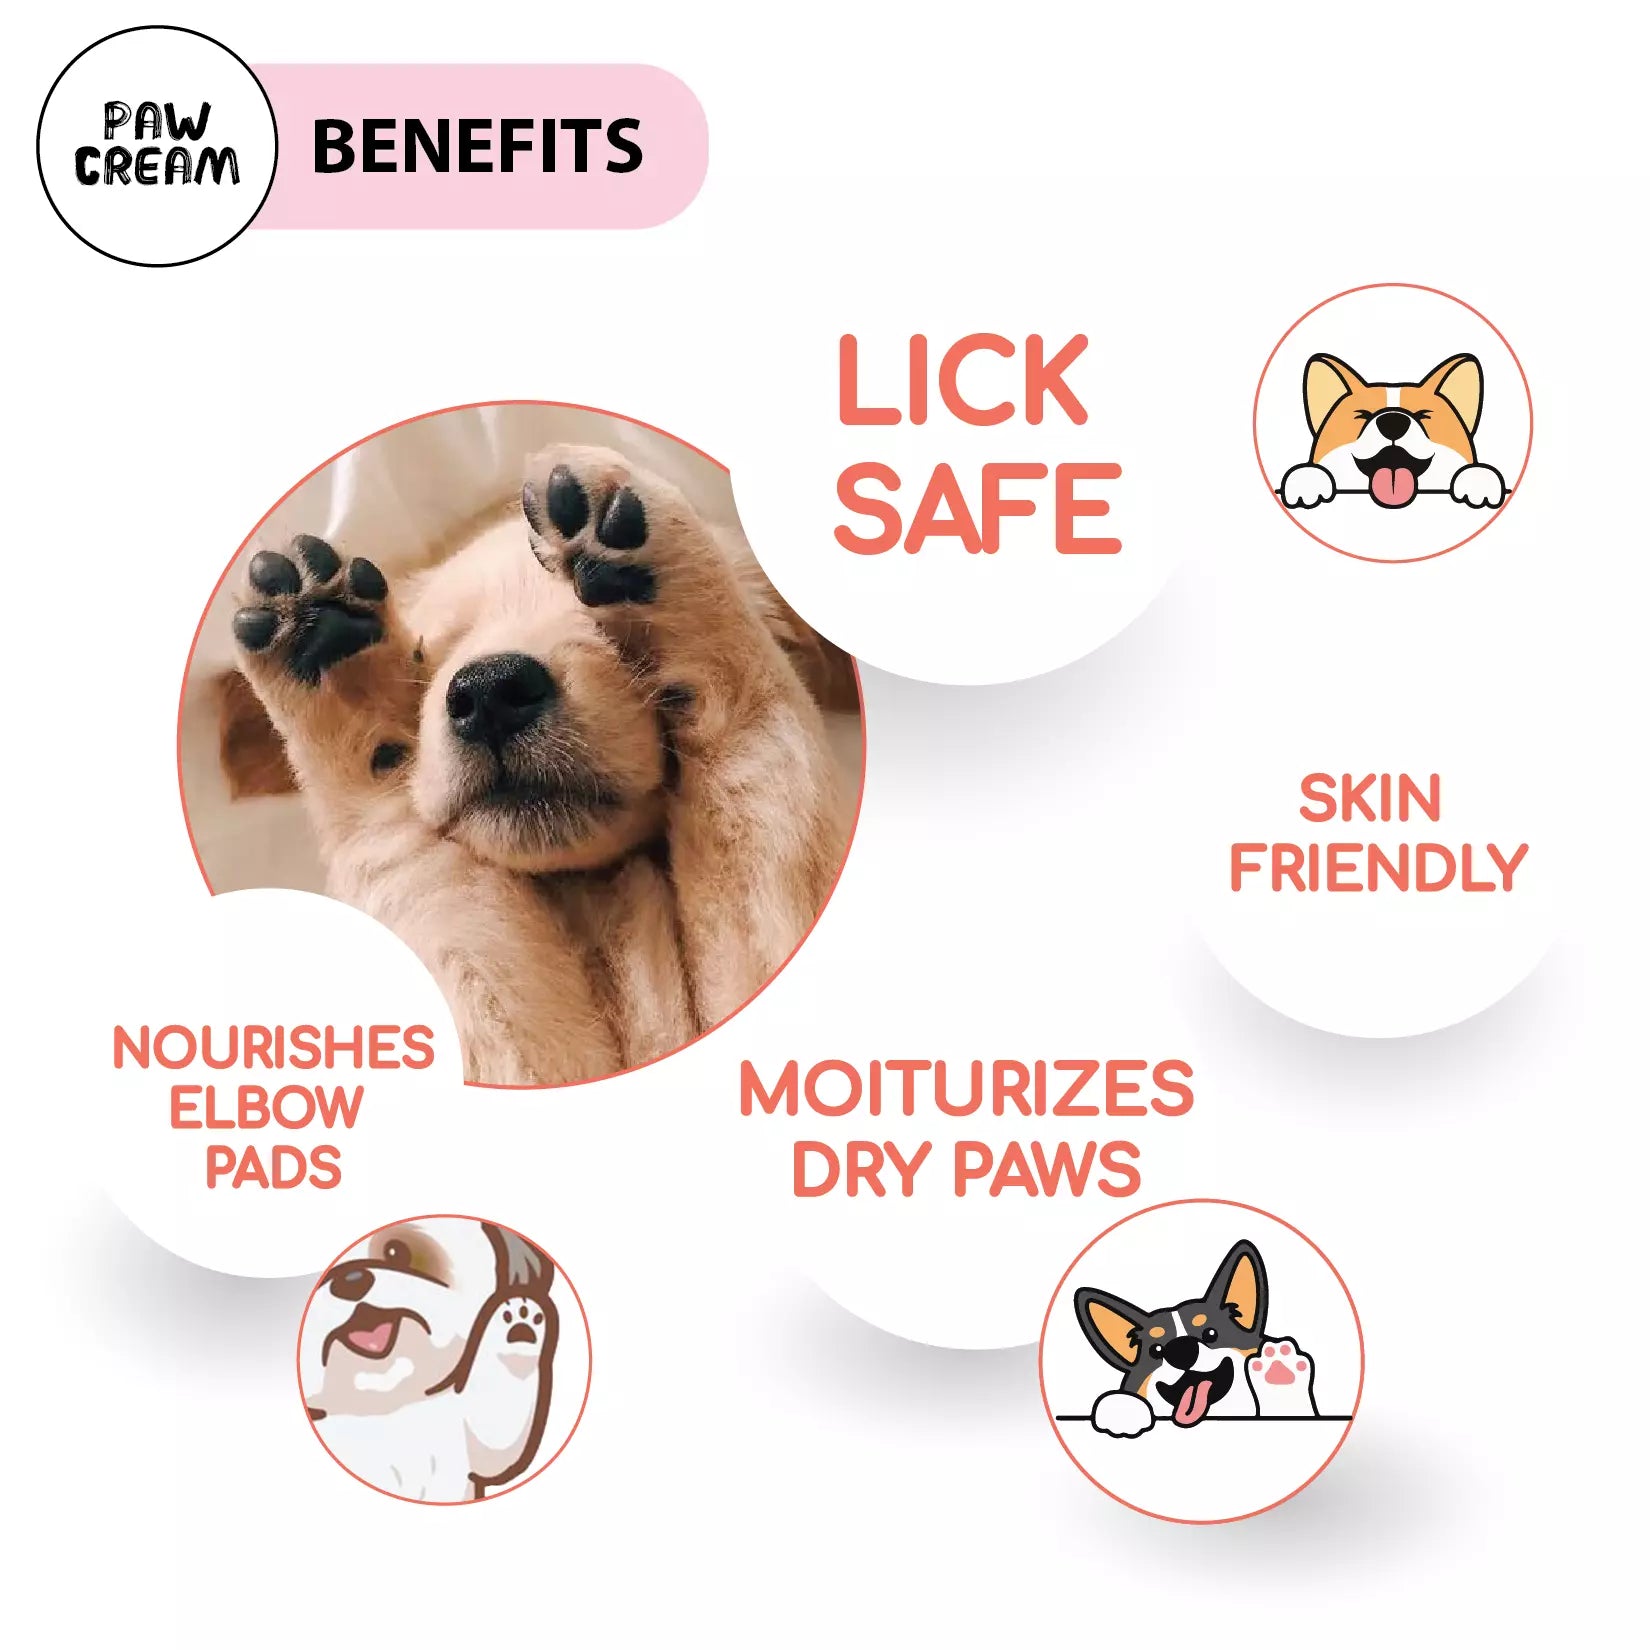 Paw Cream Benefits: Lick-Safe, Elbow Pad Nourishment, Moisturizes Dry Paws, Skin-Friendly